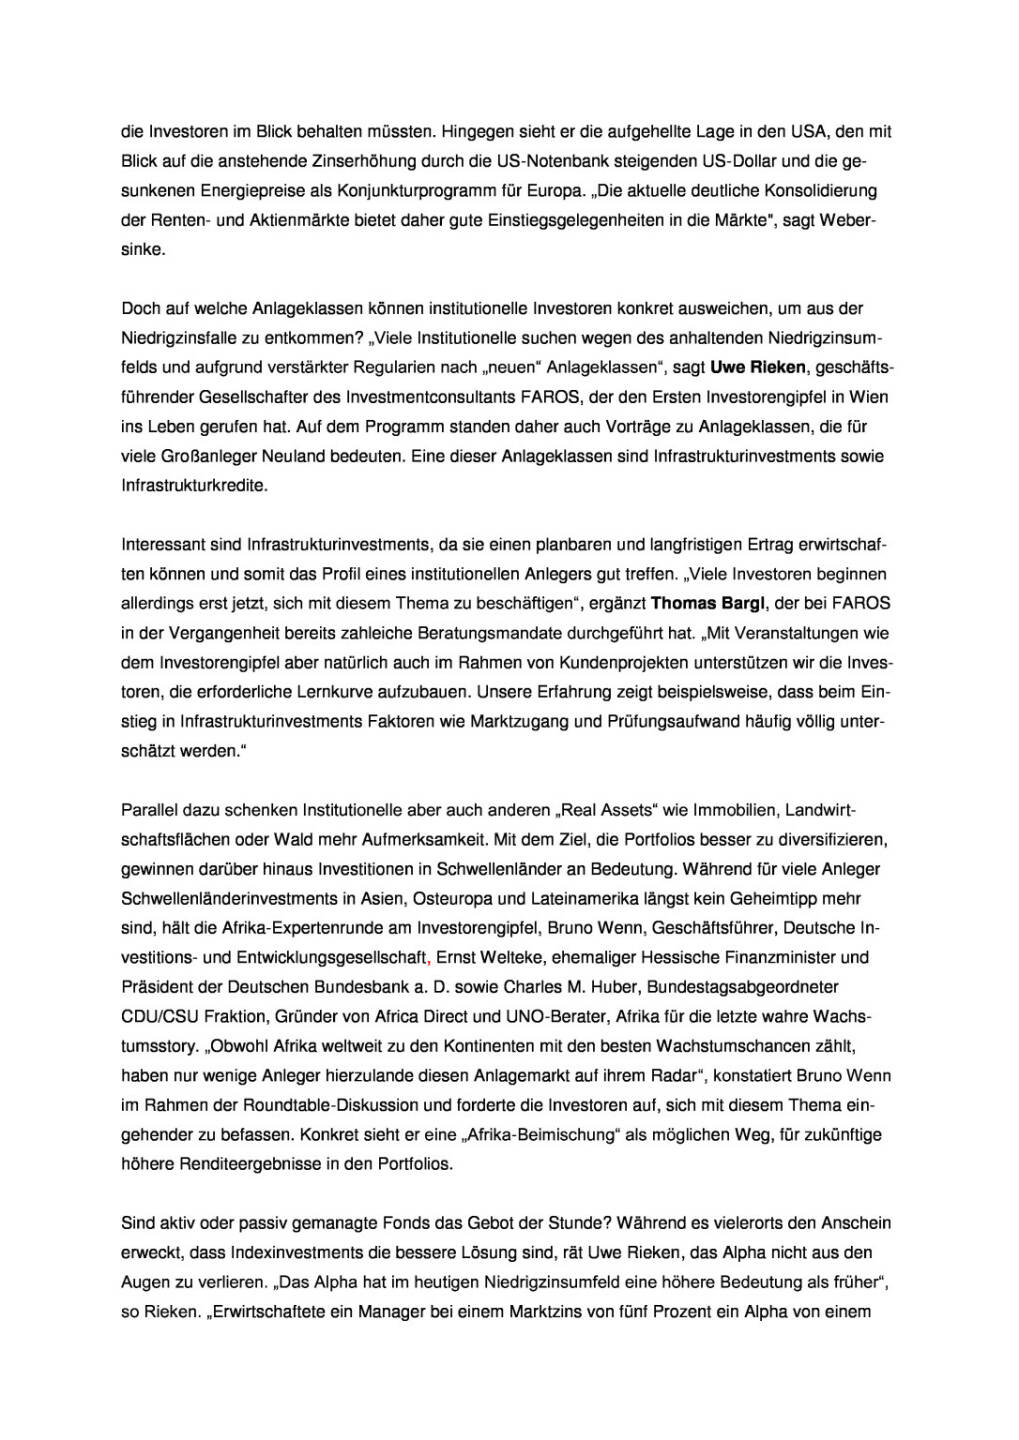 Faros Consulting: Erster Institutioneller Investorengipfel in Wien, Seite 2/3, komplettes Dokument unter http://boerse-social.com/static/uploads/file_124_faros_consulting.pdf